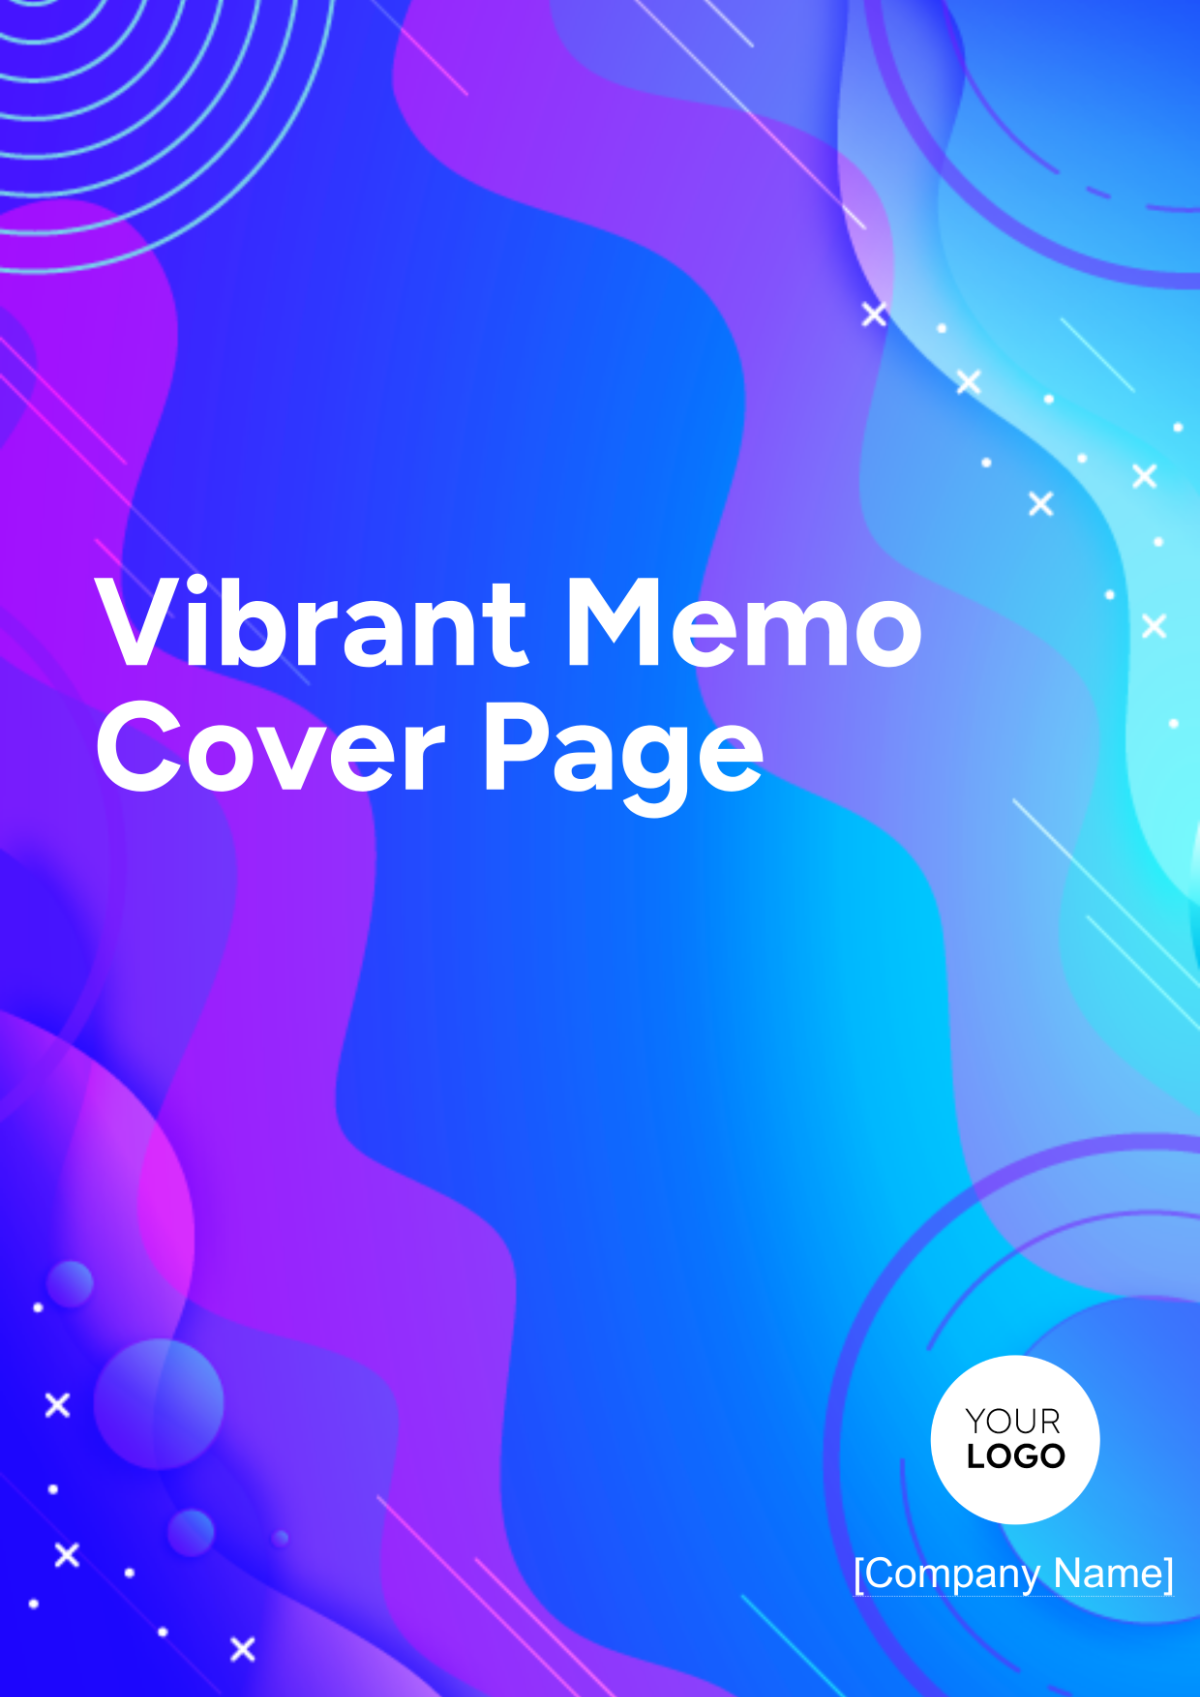 Vibrant Memo Cover Page Template